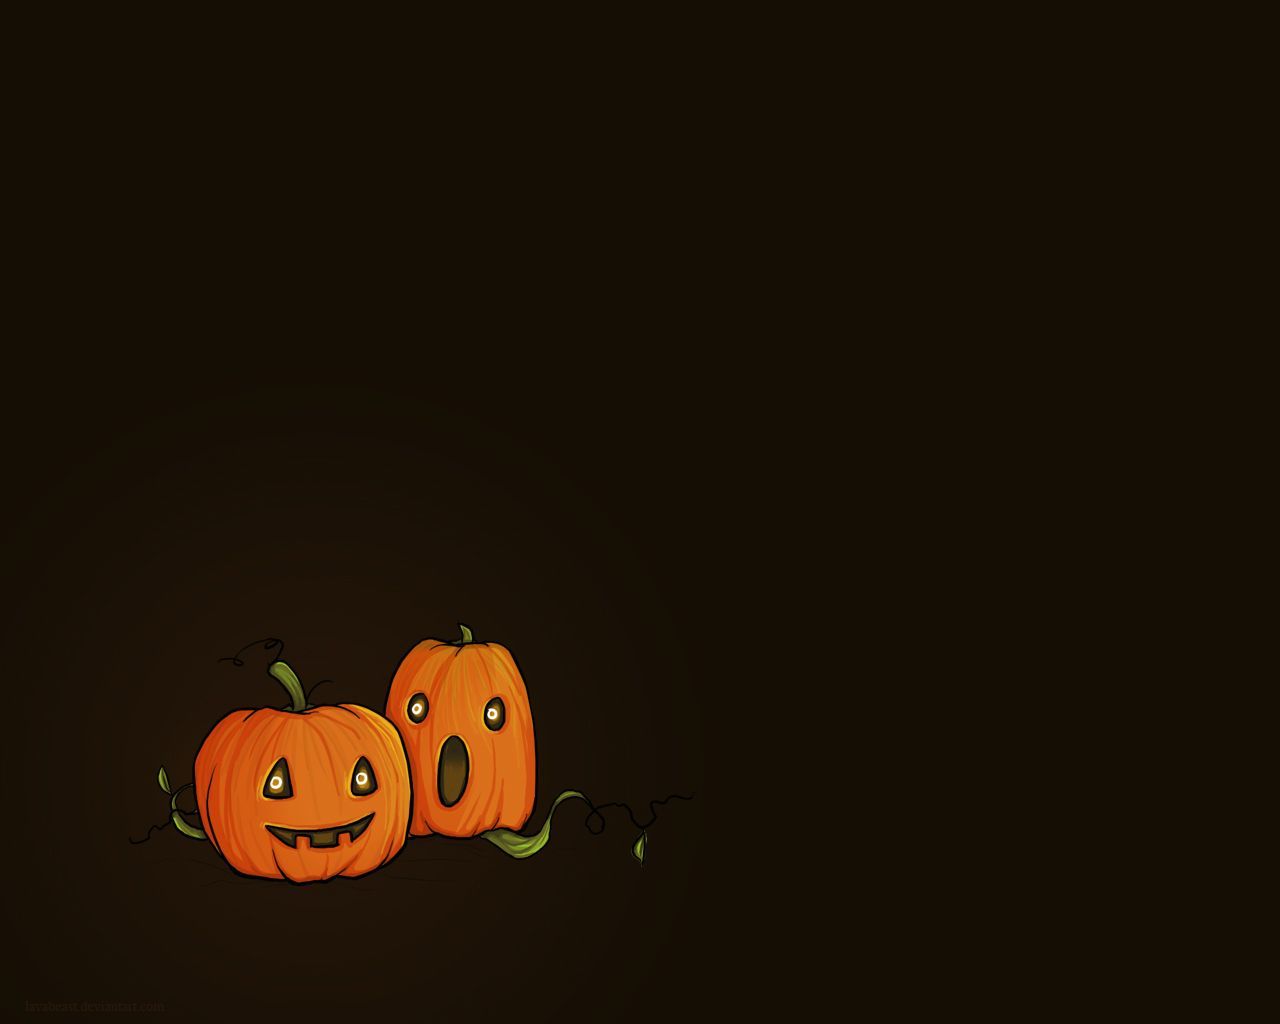 Cute Halloween Desktop Wallpaper. Halloween desktop wallpaper, Pumpkin wallpaper, Halloween wallpaper